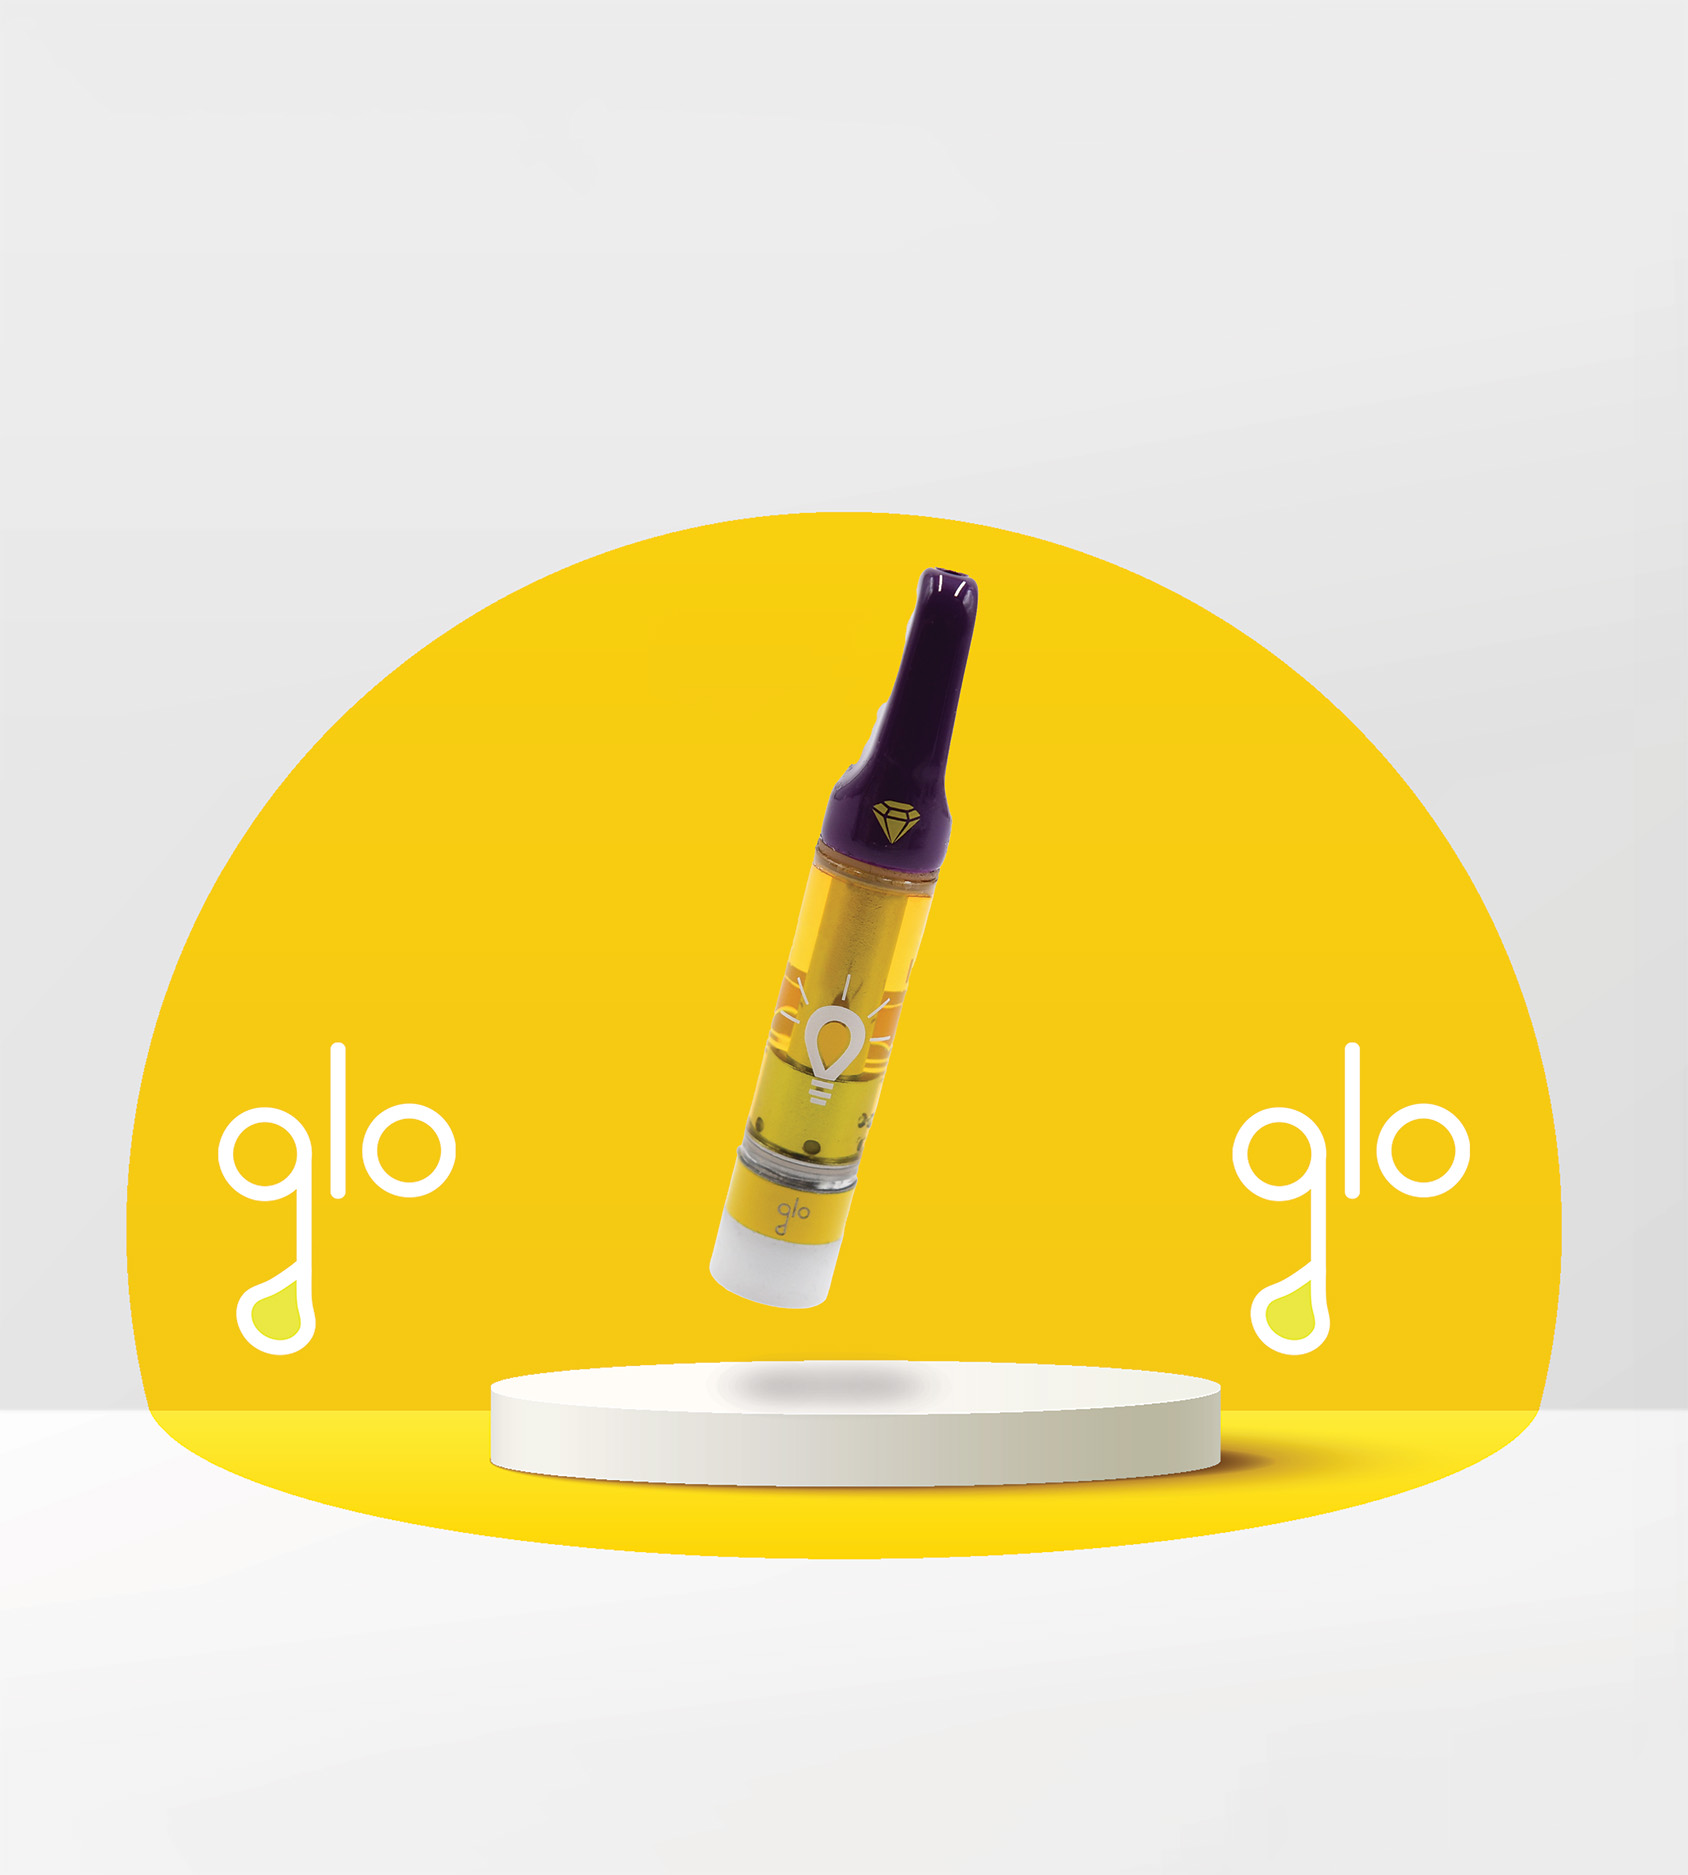 GLO Premium Distillate Cartridges